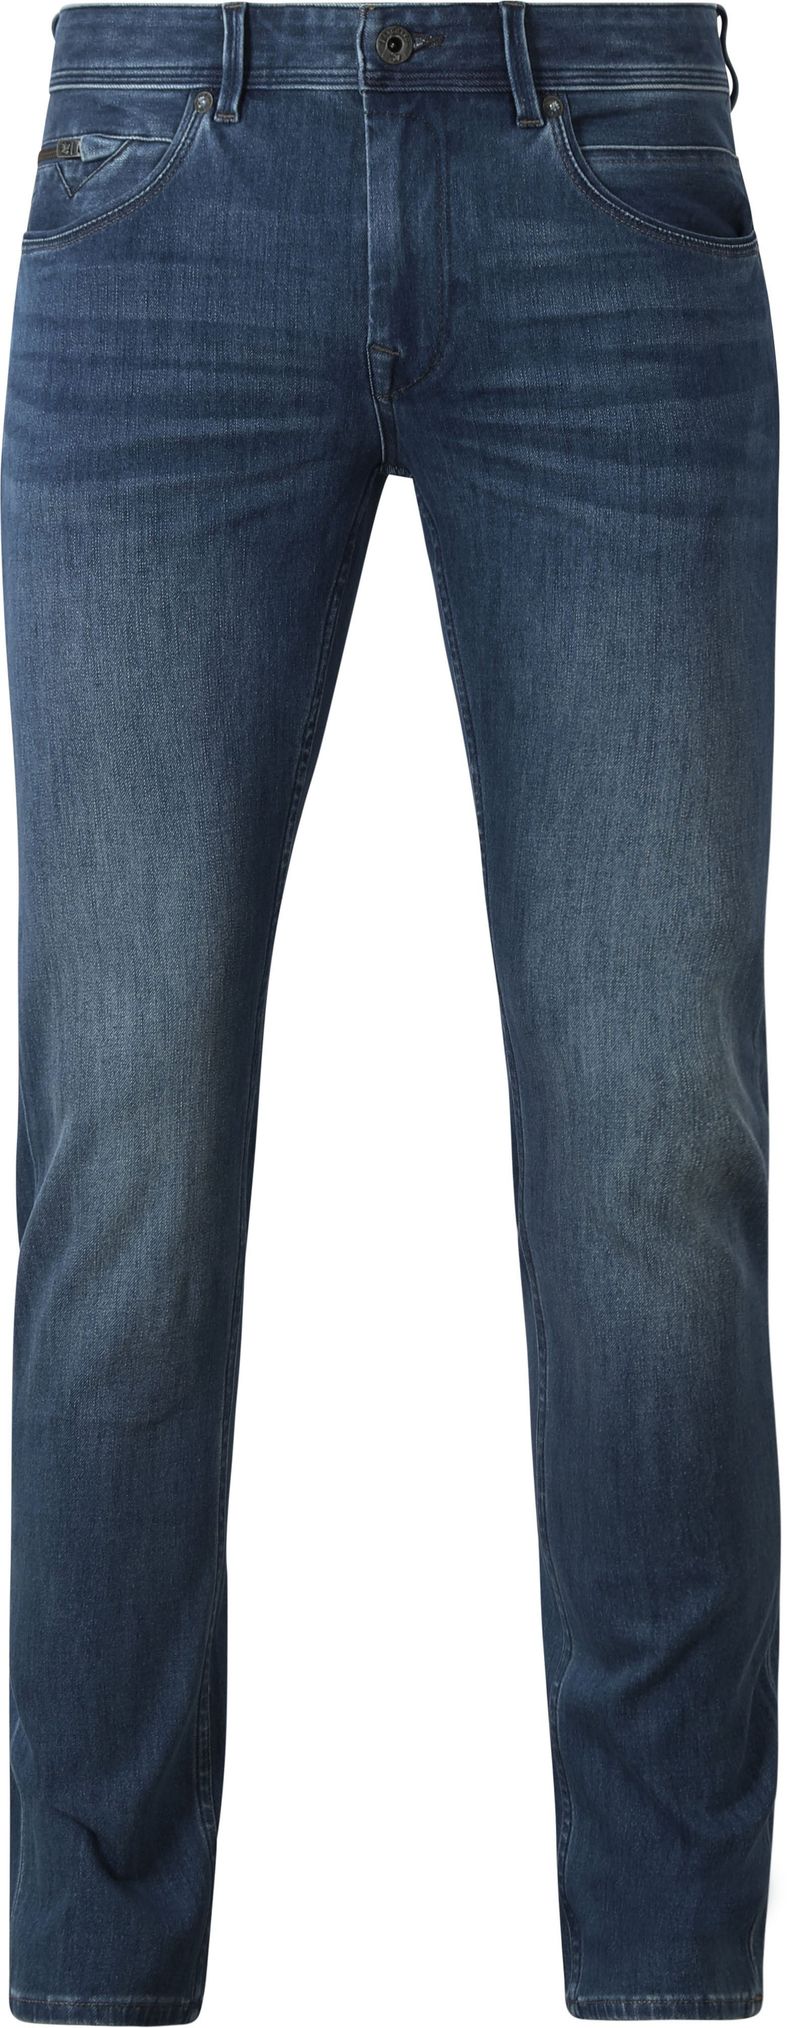 Vanguard slim fit jeans V850 RIDER used fresh wash